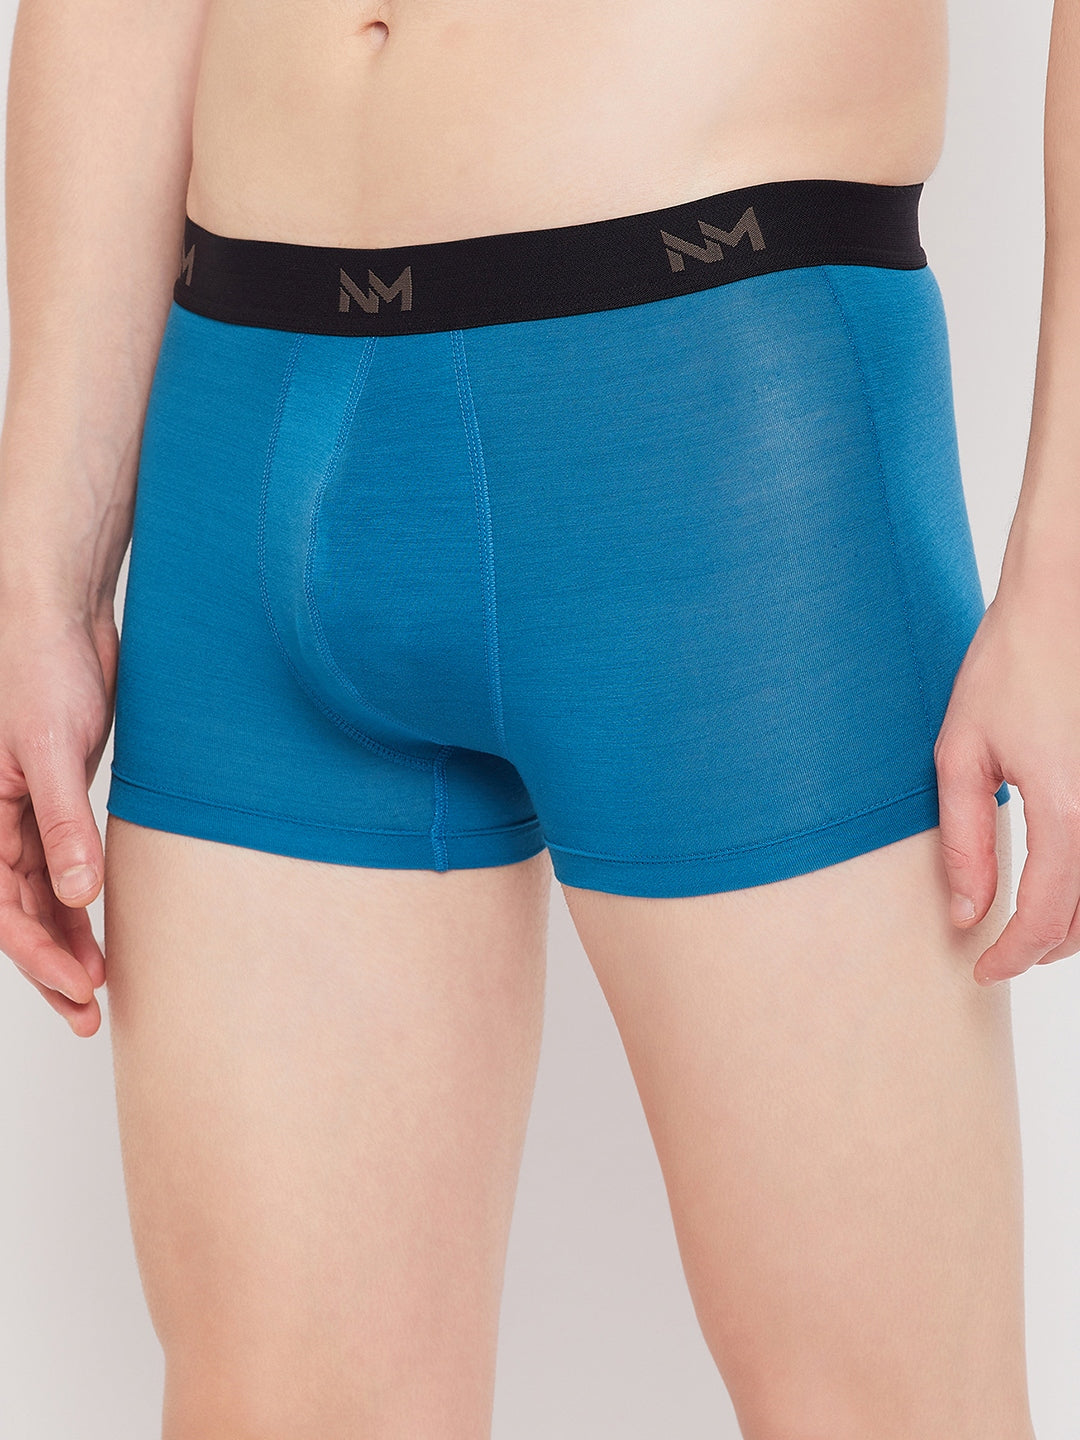 Neva Modal Solid Ultra Short Trunk/Underwear for Men- Black, Blue, Maroon Collection (Pack of 3)